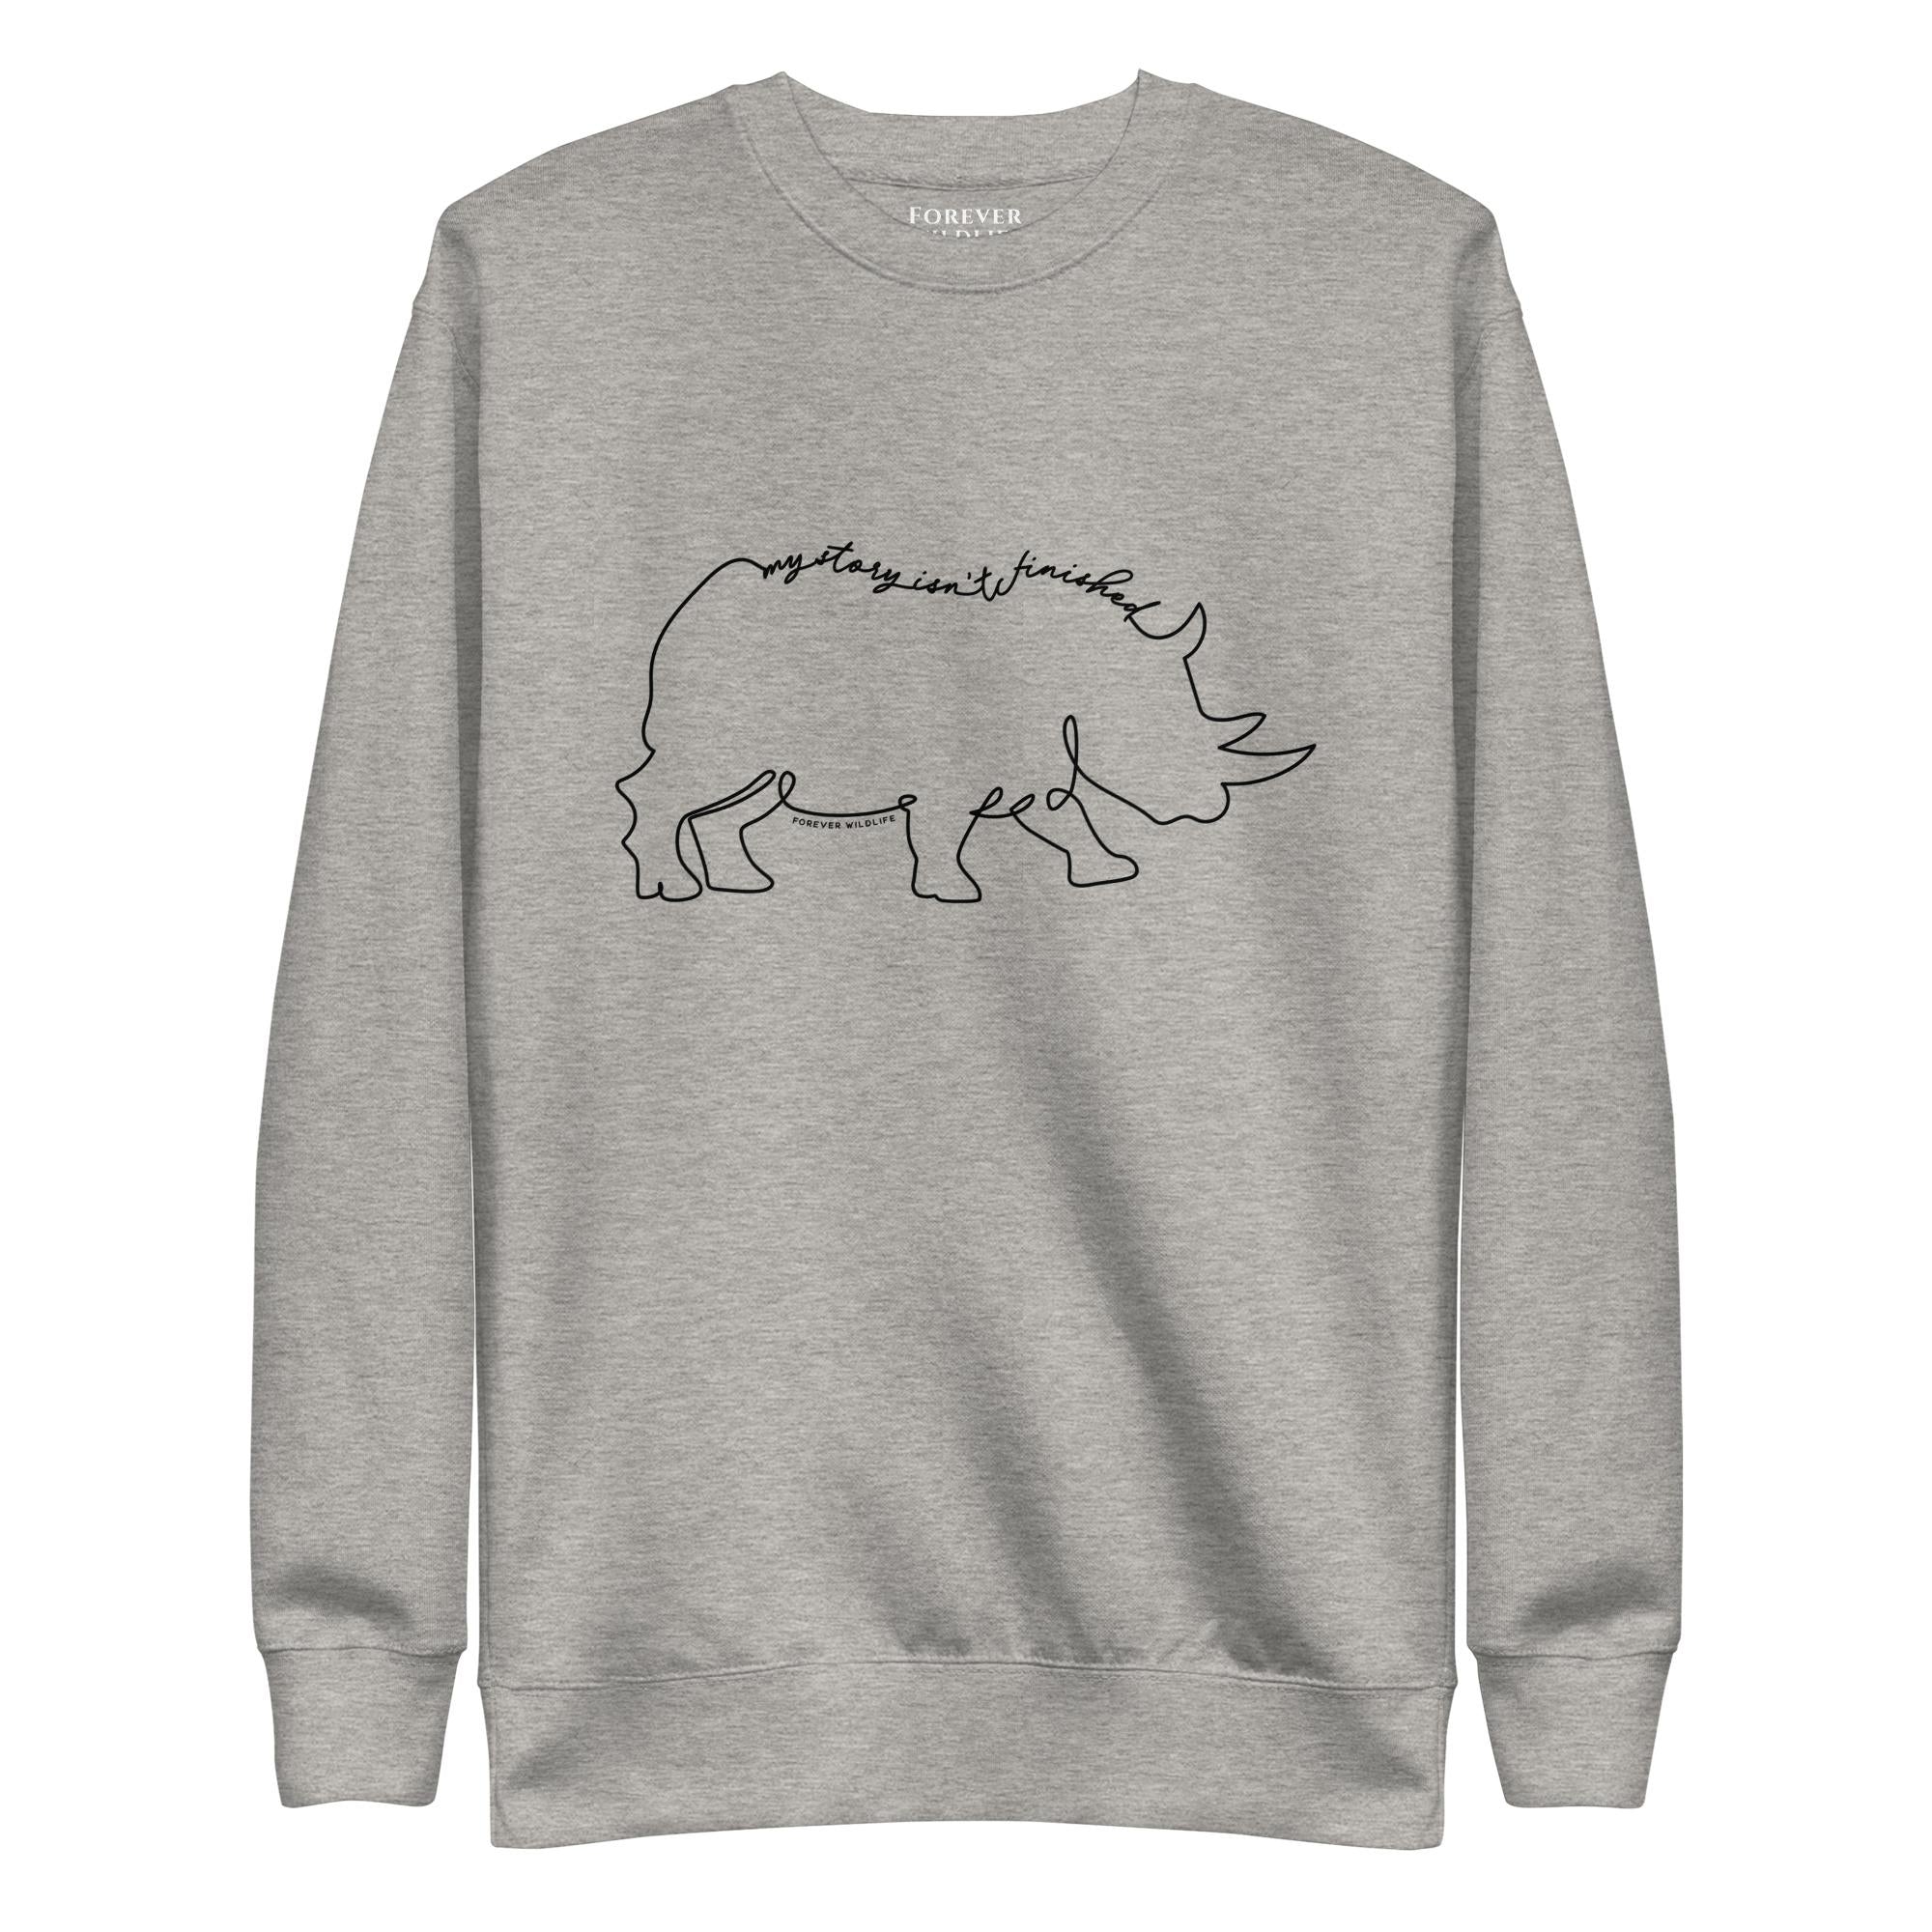 Rhino Sweatshirt in Grey-Premium Wildlife Animal Inspiration Sweatshirt Design with 'My Story Isn't Finished' text, part of Wildlife Sweatshirts & Clothing from Forever Wildlife.